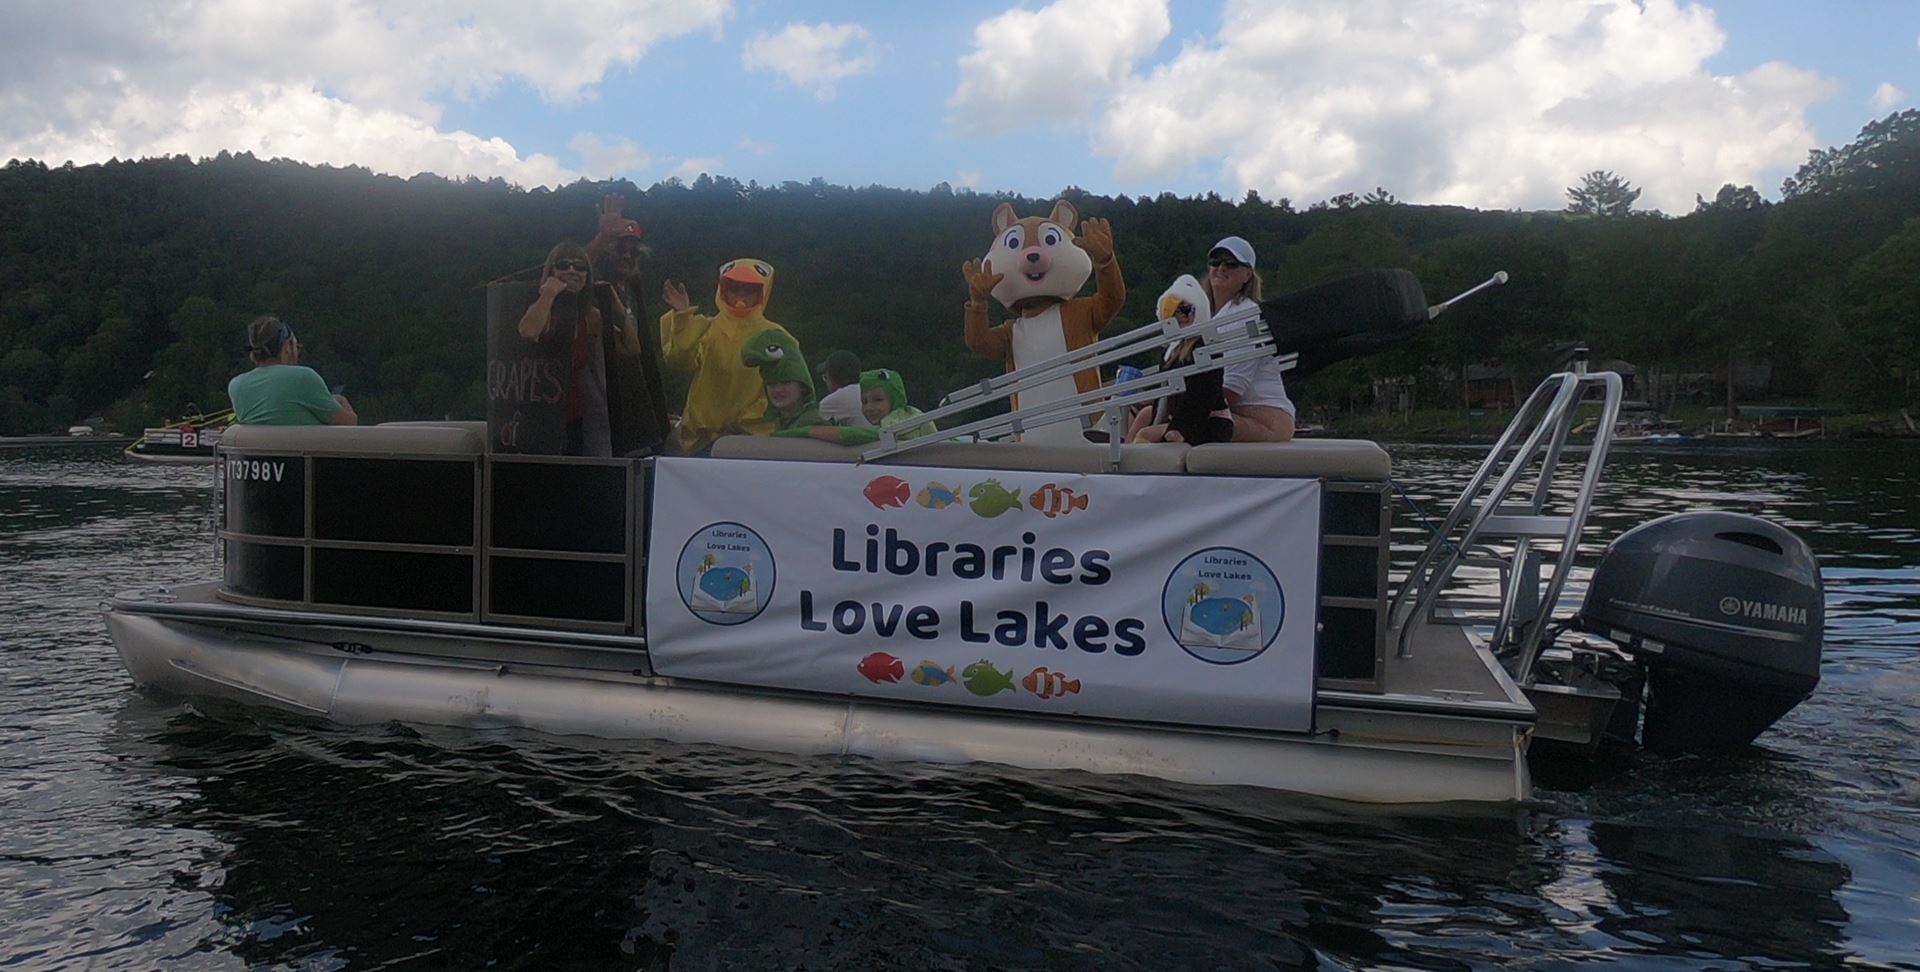 Libraries Love Lakes Boat